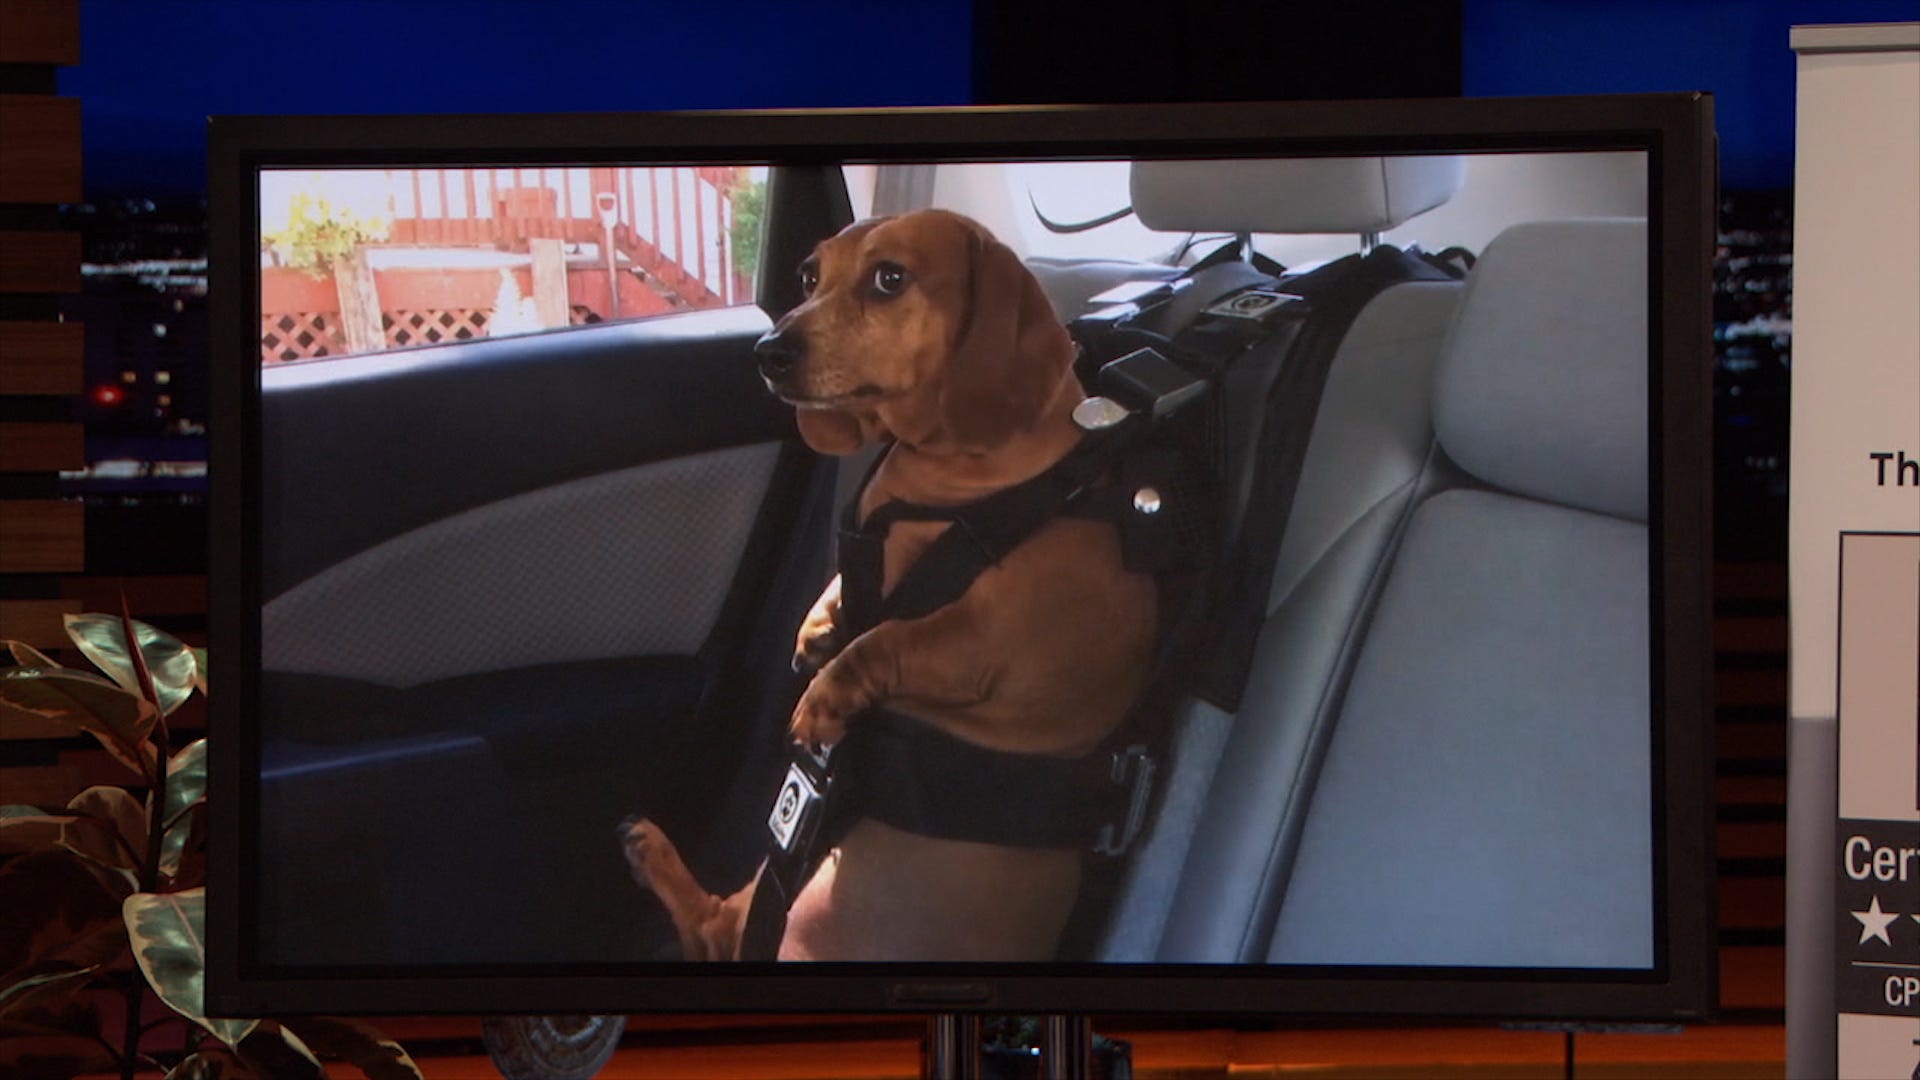 dog seat belt shark tank